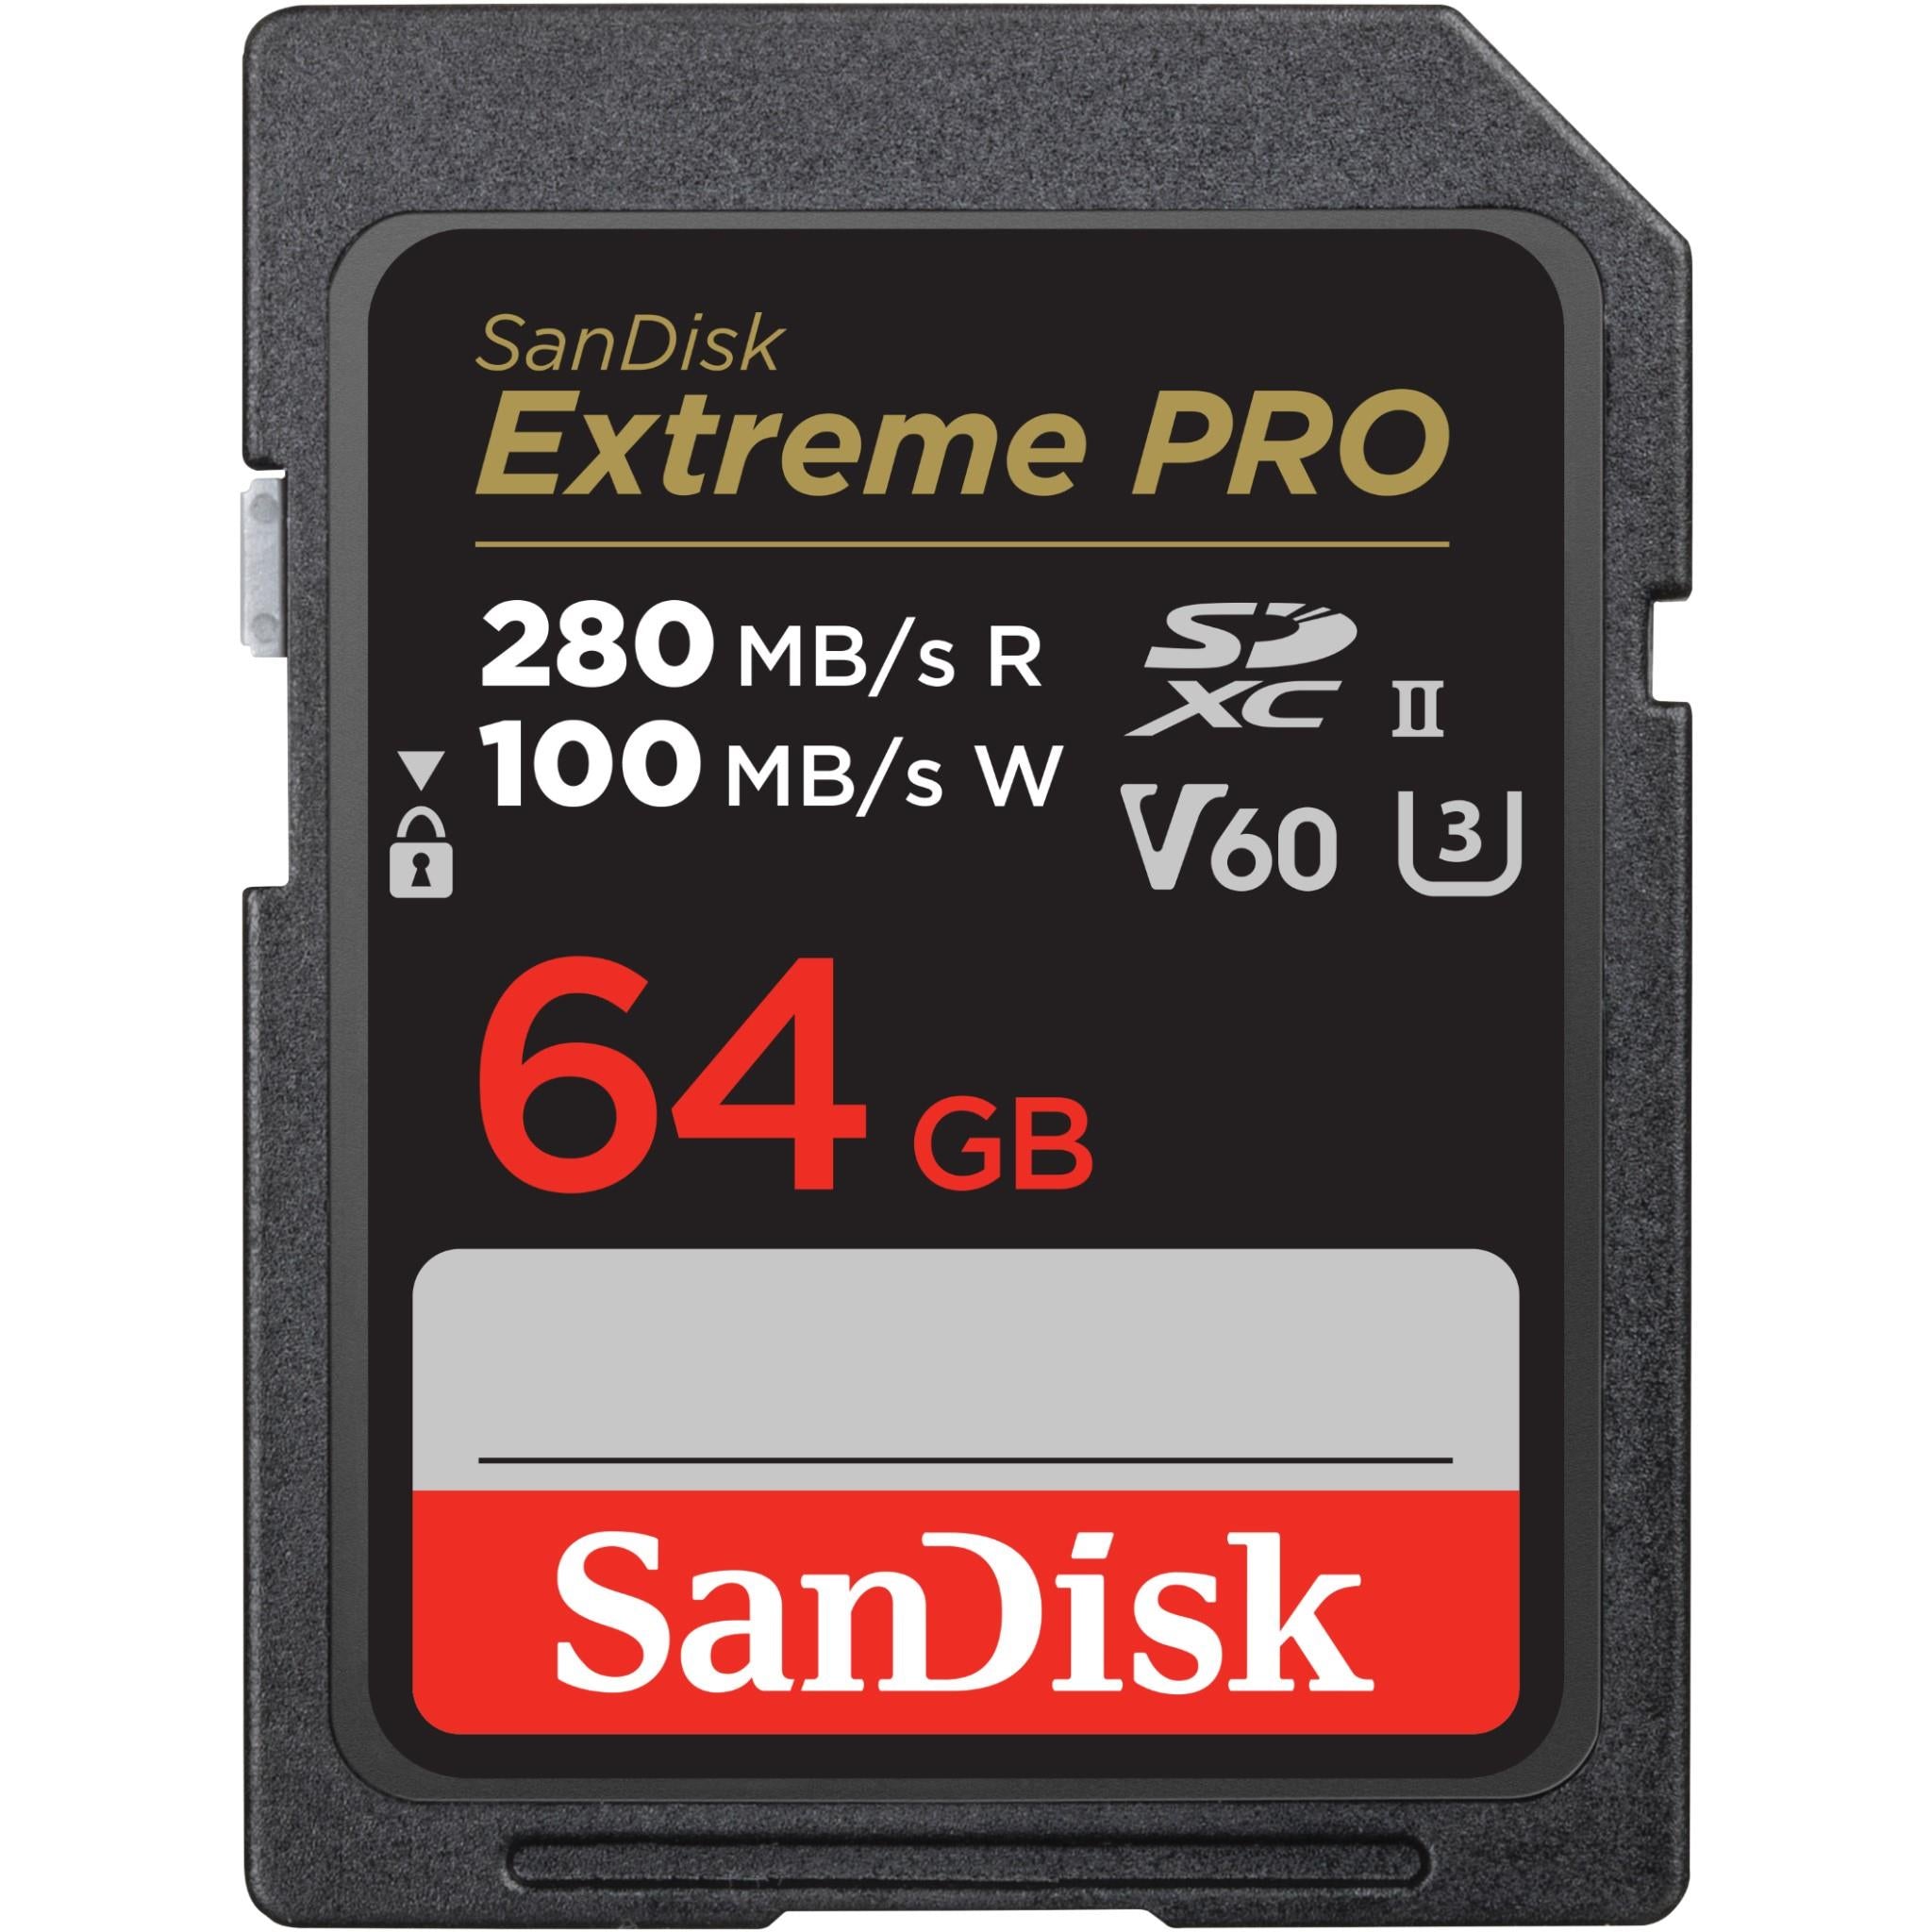 Sandisk Extreme Pro